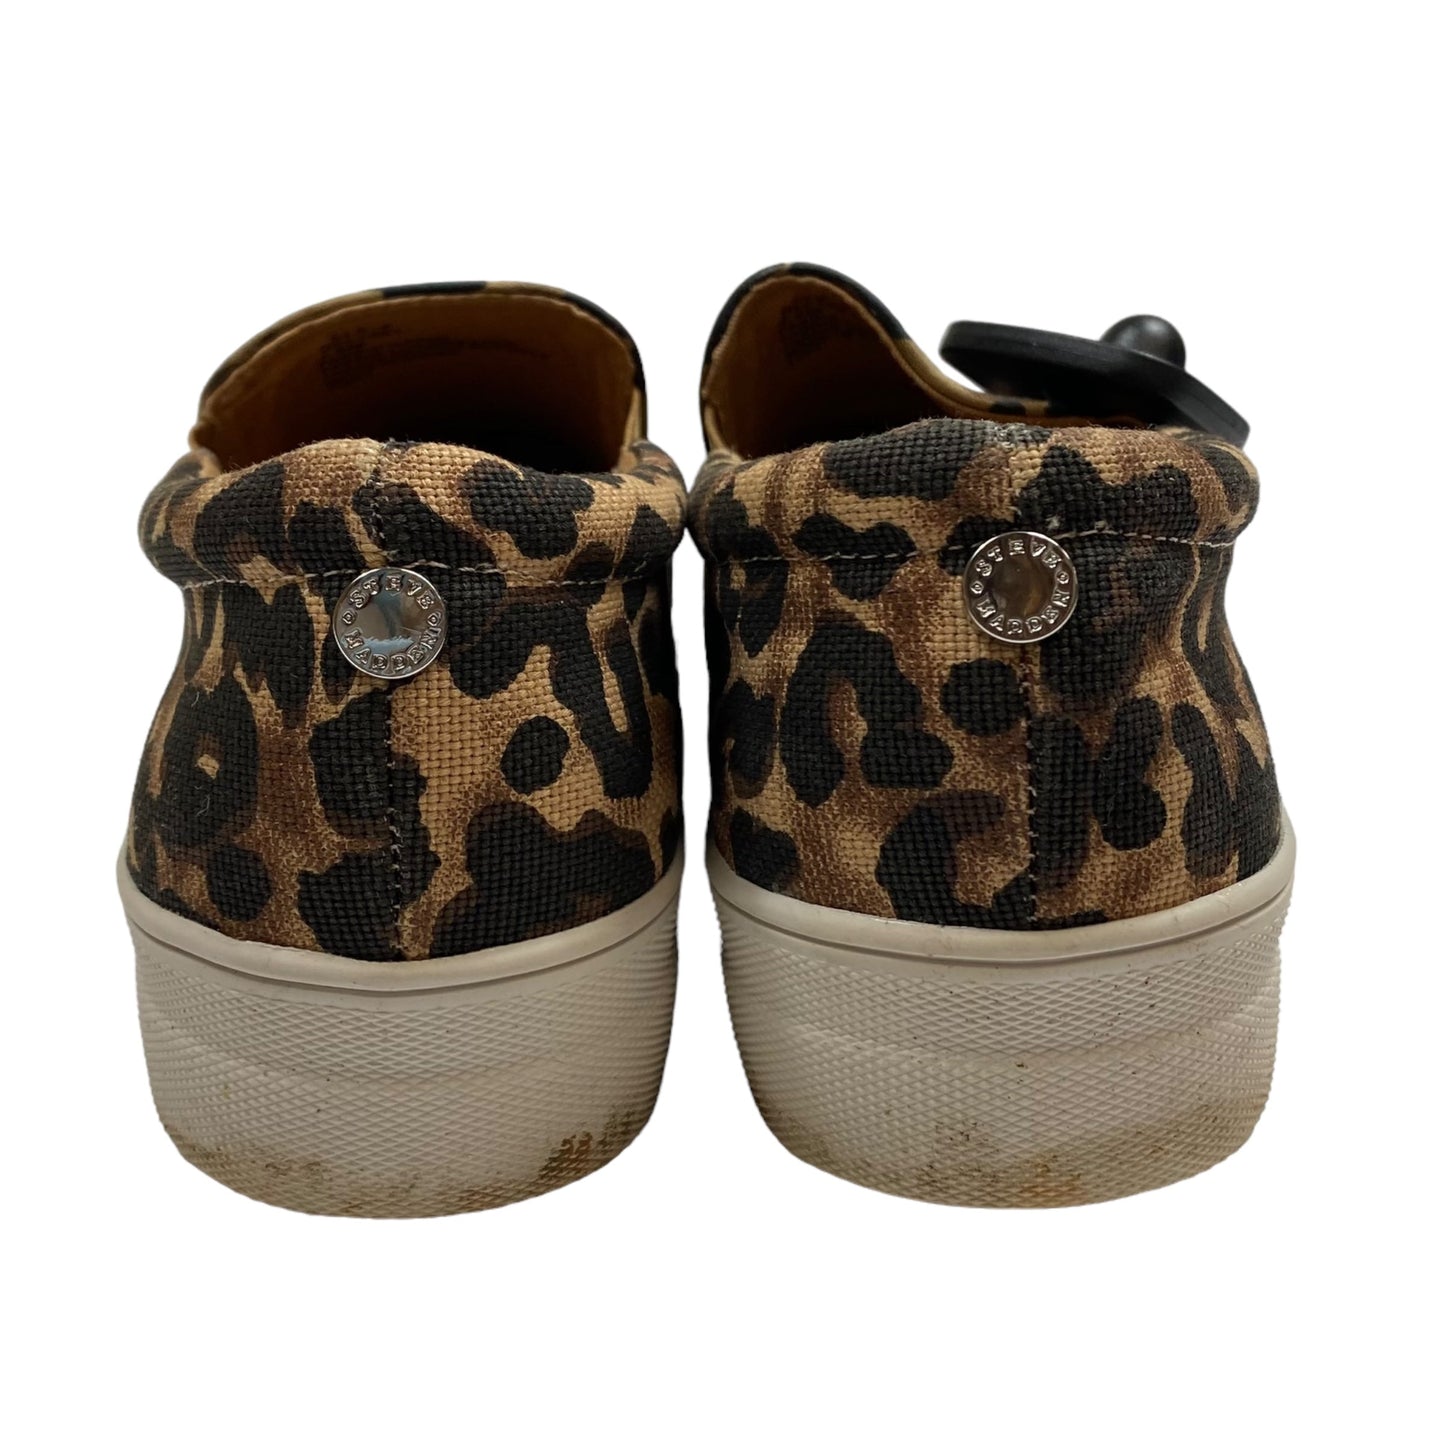 Animal Print Shoes Flats Steve Madden, Size 9.5